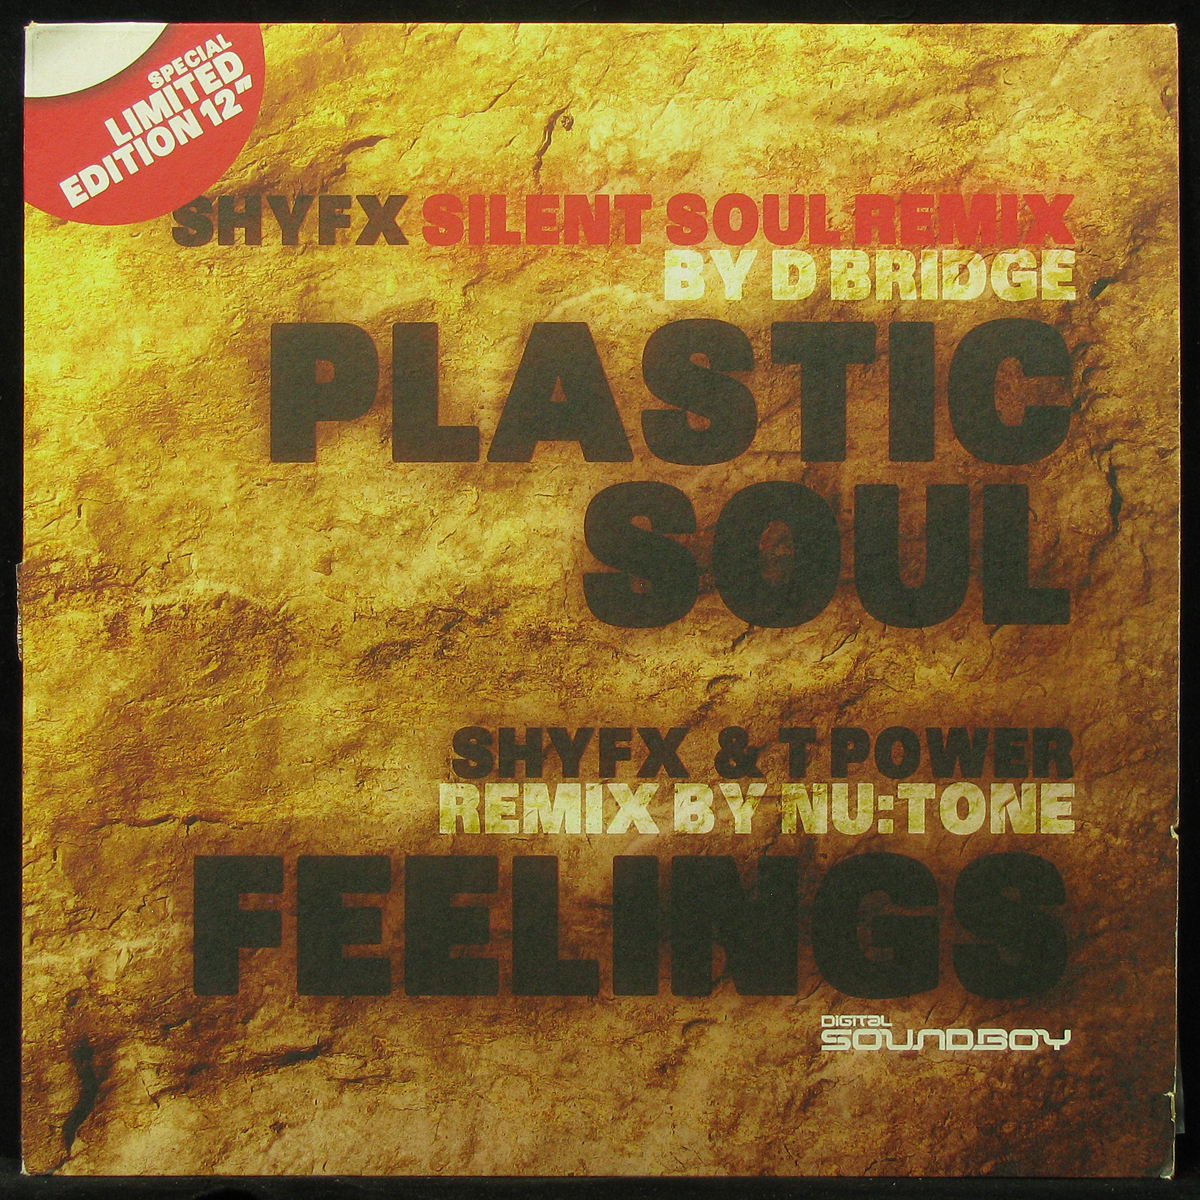 LP Shy FX / Shy FX & T Power — Plastic Soul (D Bridge Silent Soul Remix) / Feelings (Nu:Tone Remix) (maxi) фото